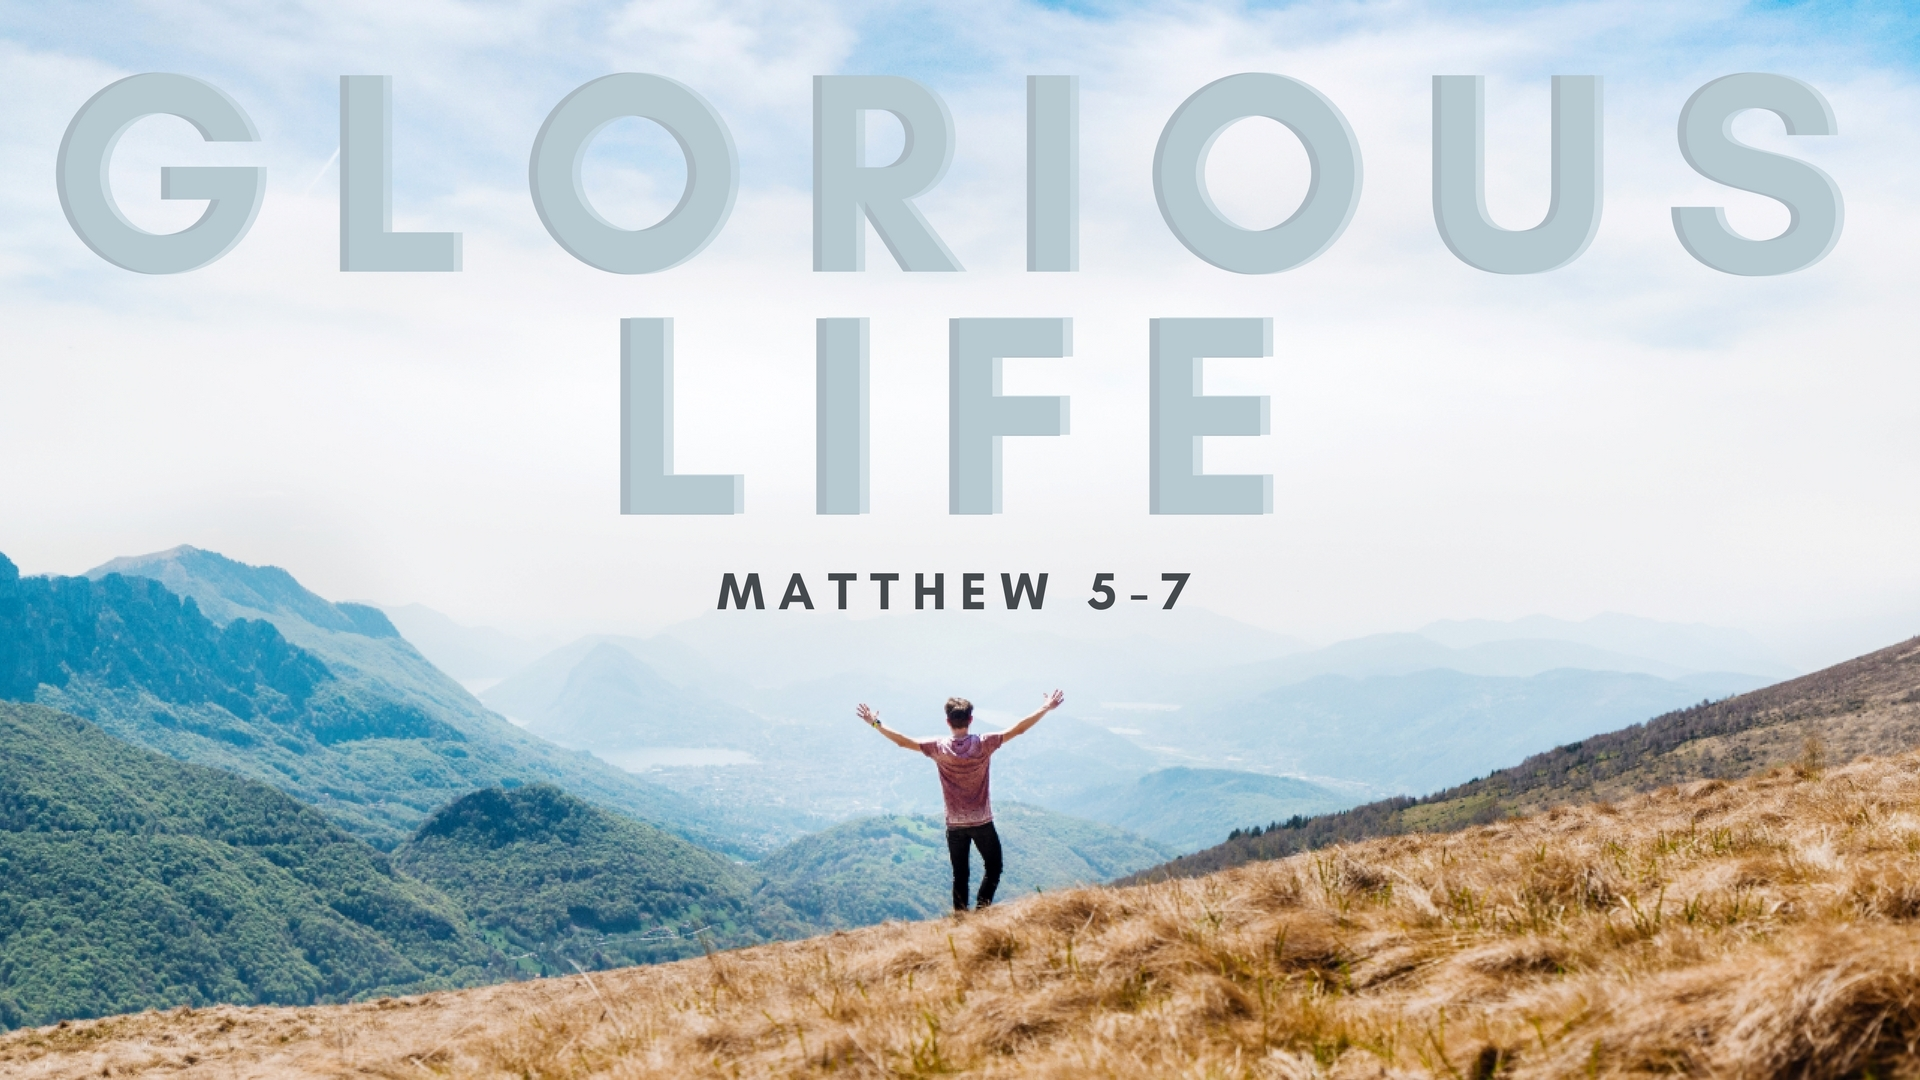 Choosing the Glorious Life